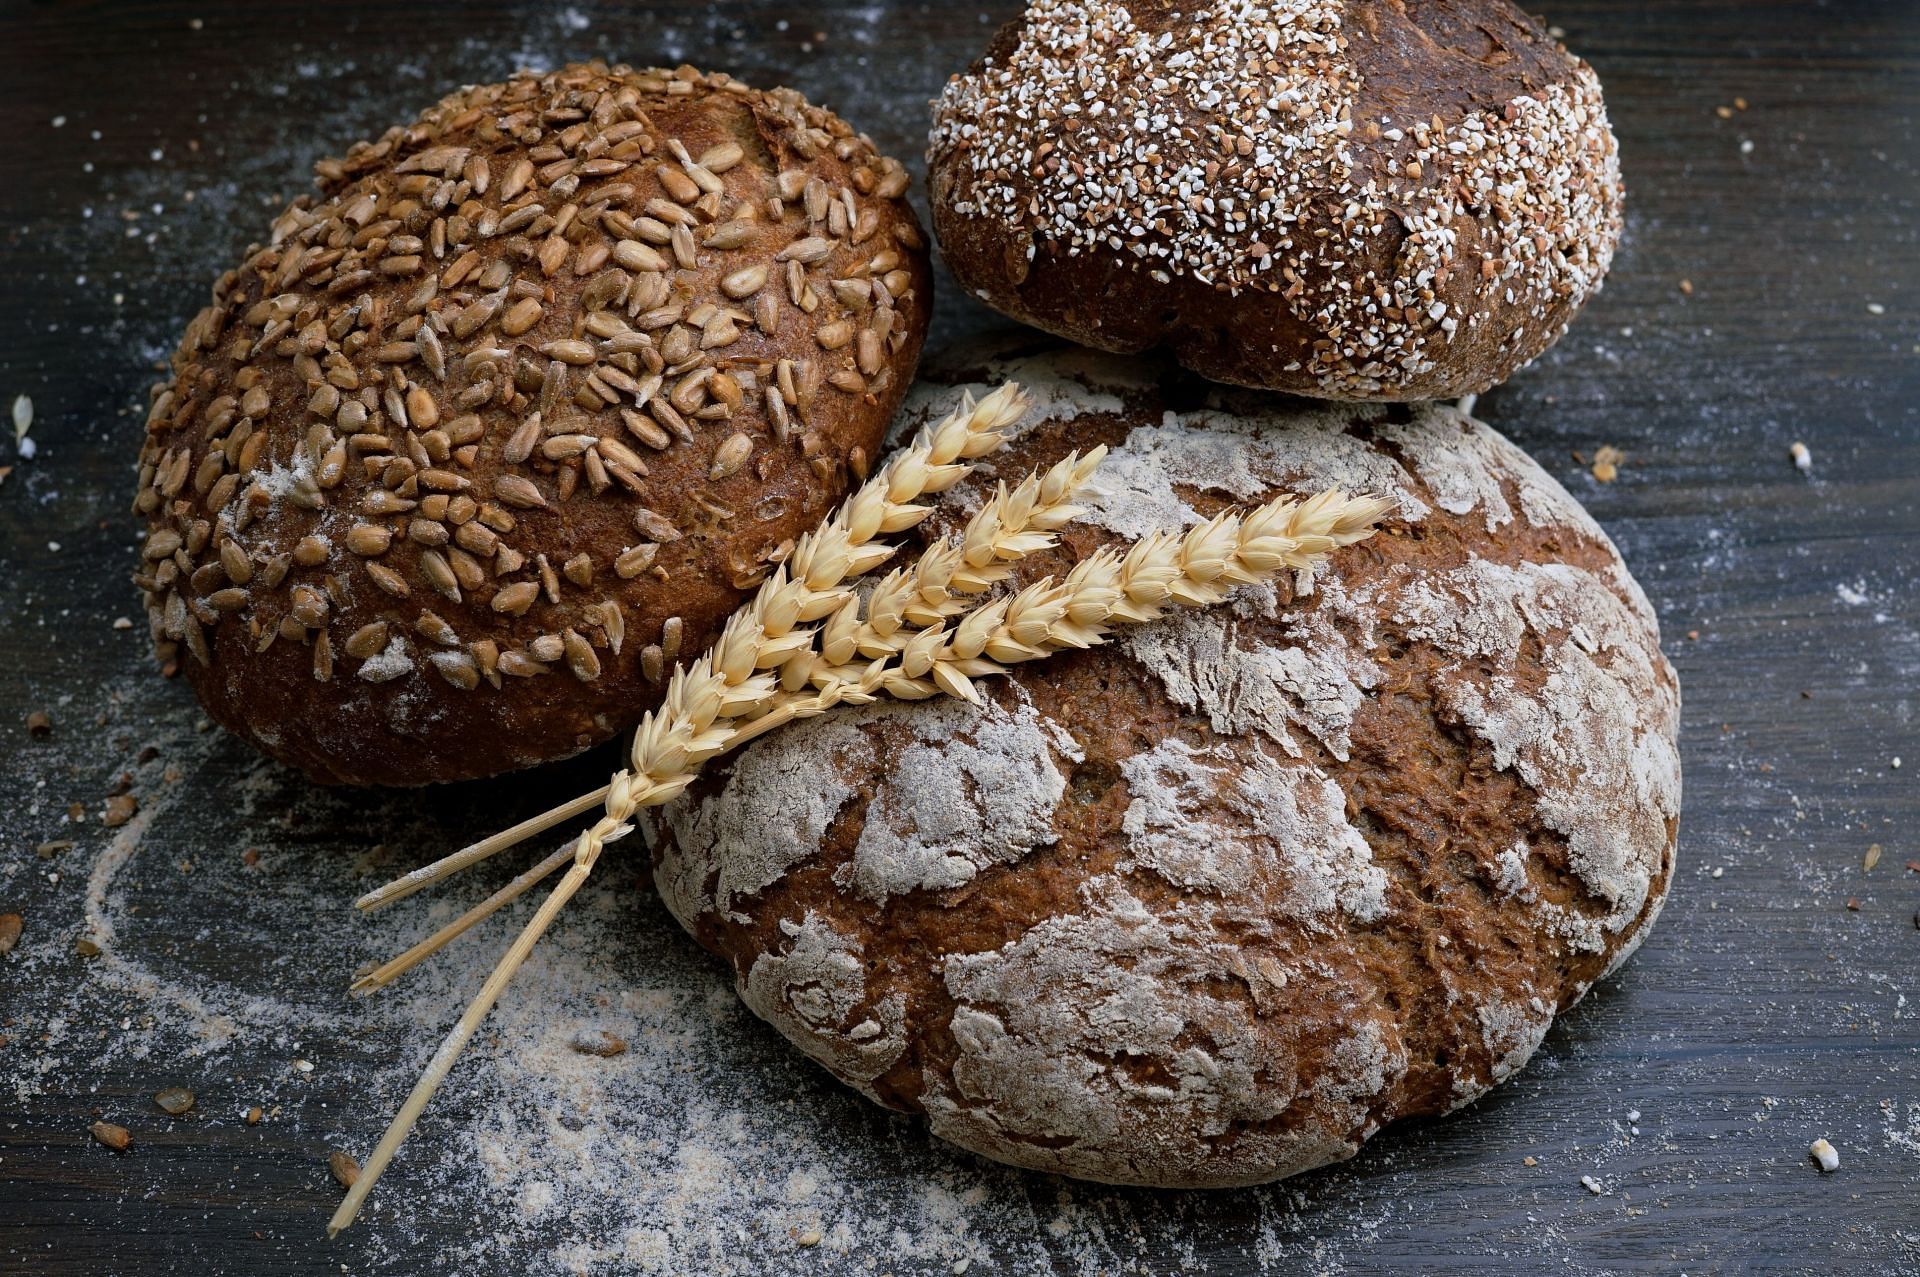 You can use wheat flour for baking as well. (Image via Unsplash/Nadya Spetnitskaya)